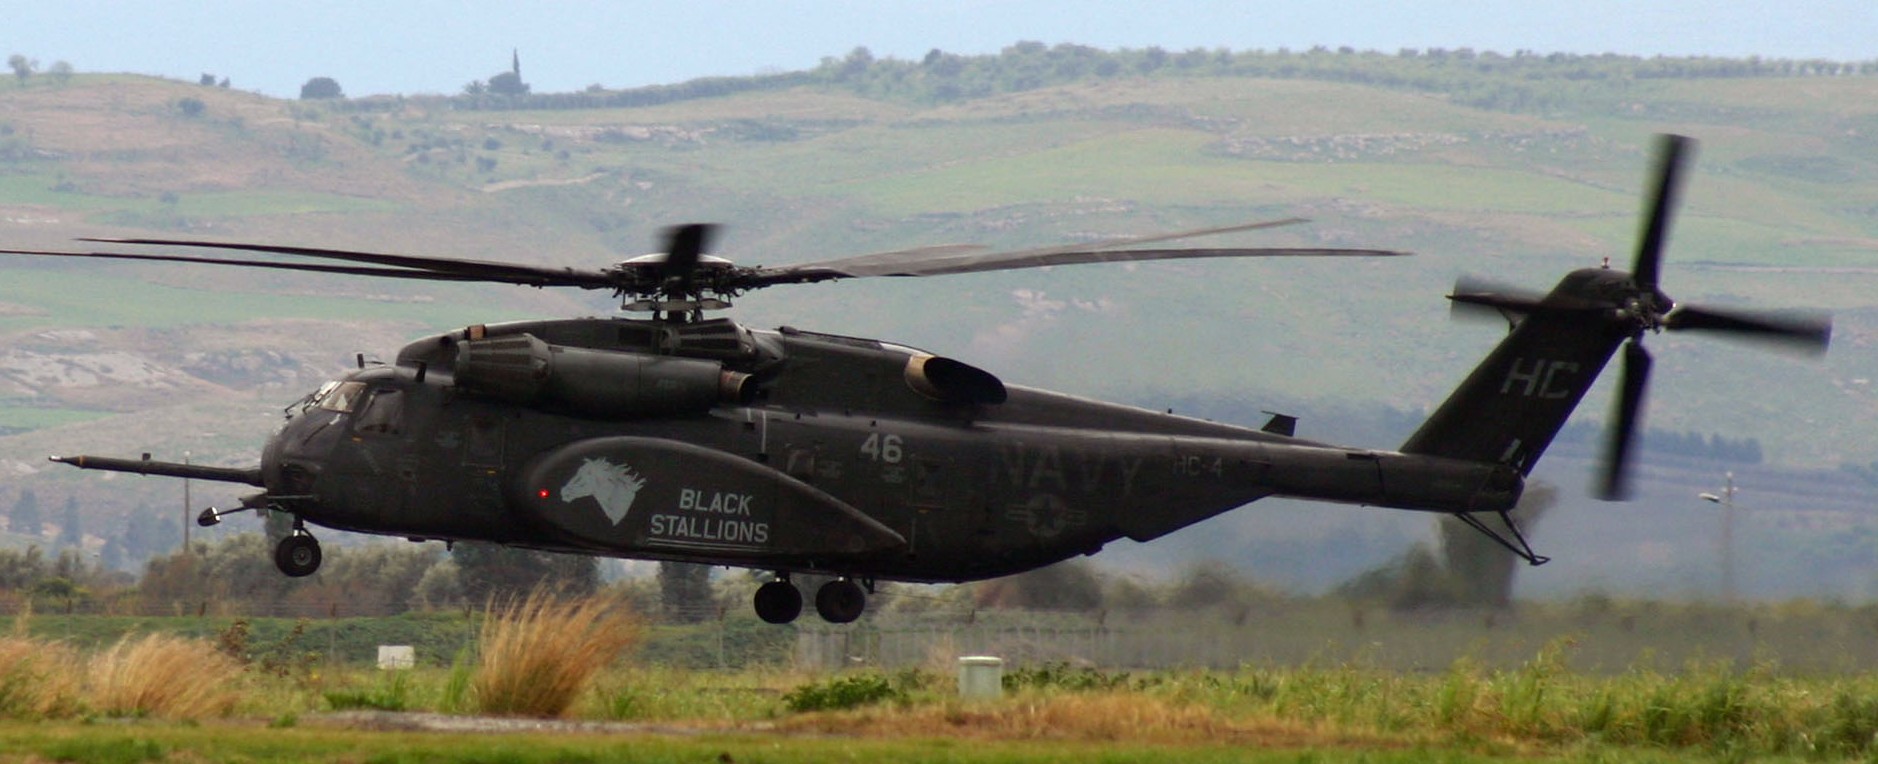 hc-4 black stallions helicopter combat support squadron mh-53e sea dragon 10